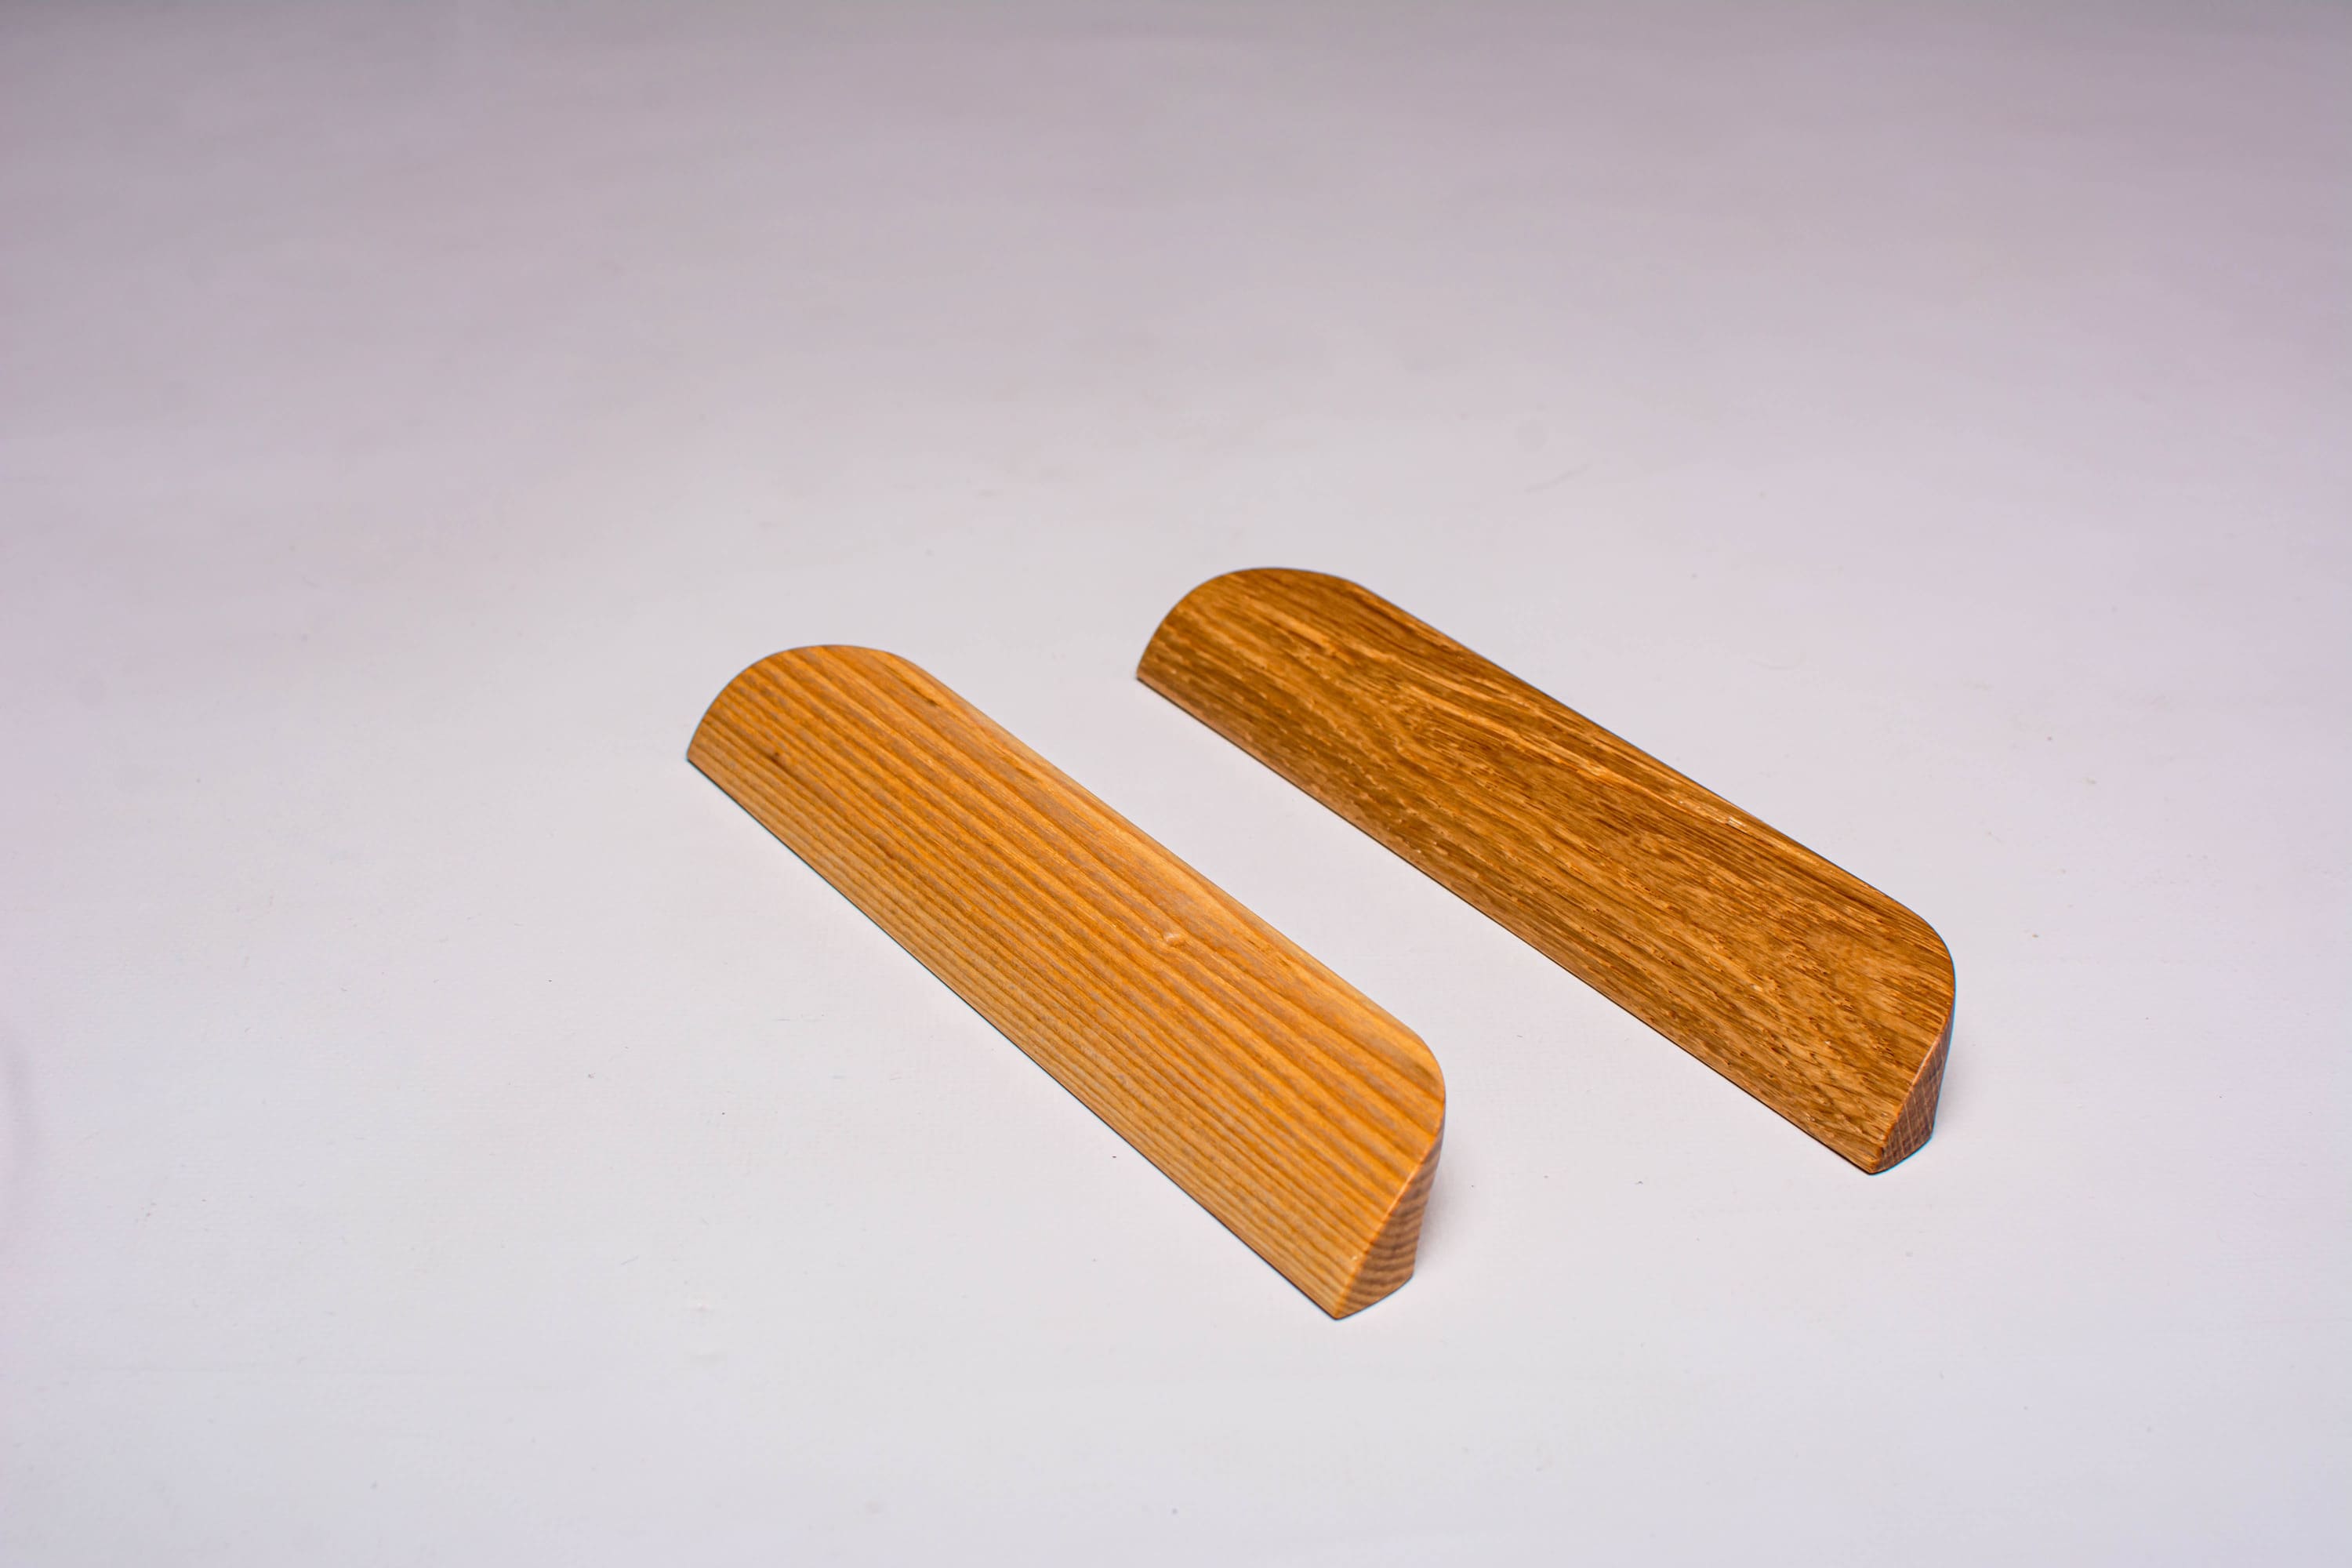 Wooden Drawer Pulls - Handmade Sleek Design